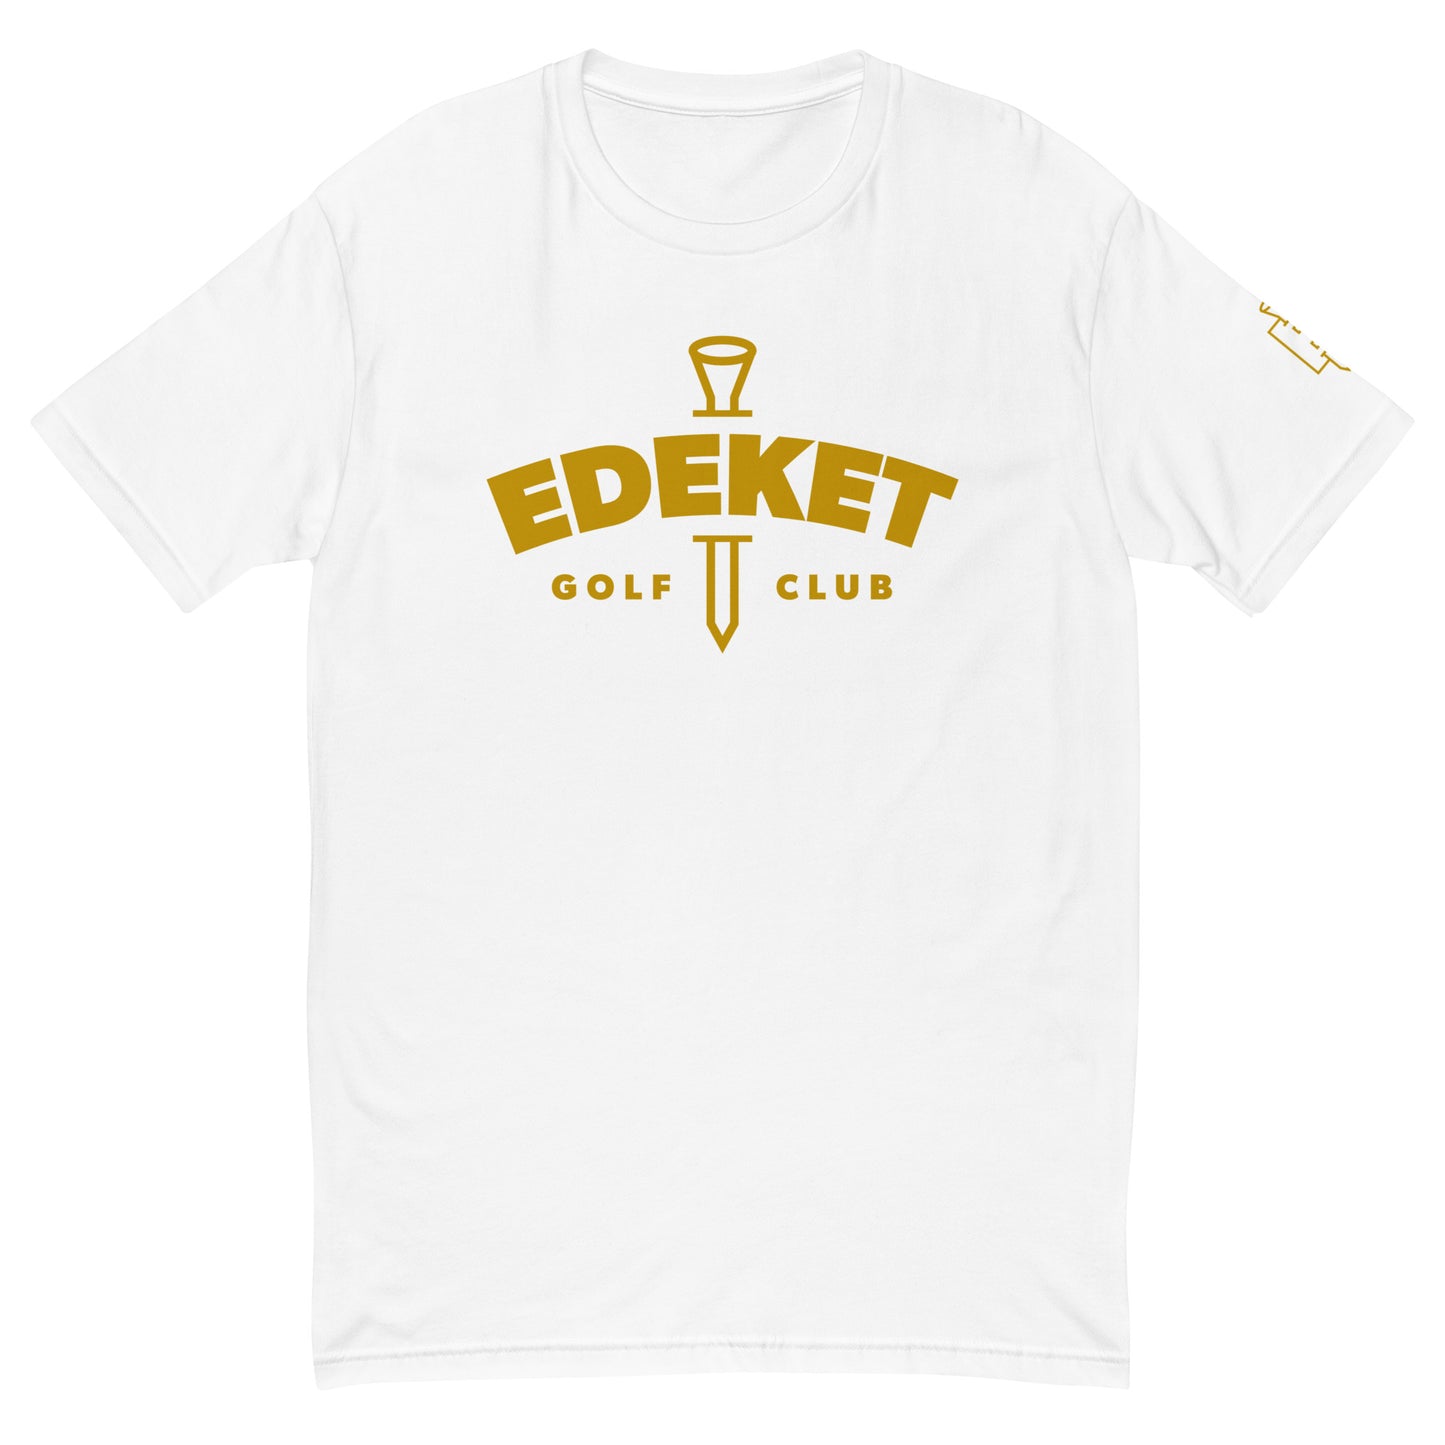 EDEKET GOLF CLUB T-SHIRT